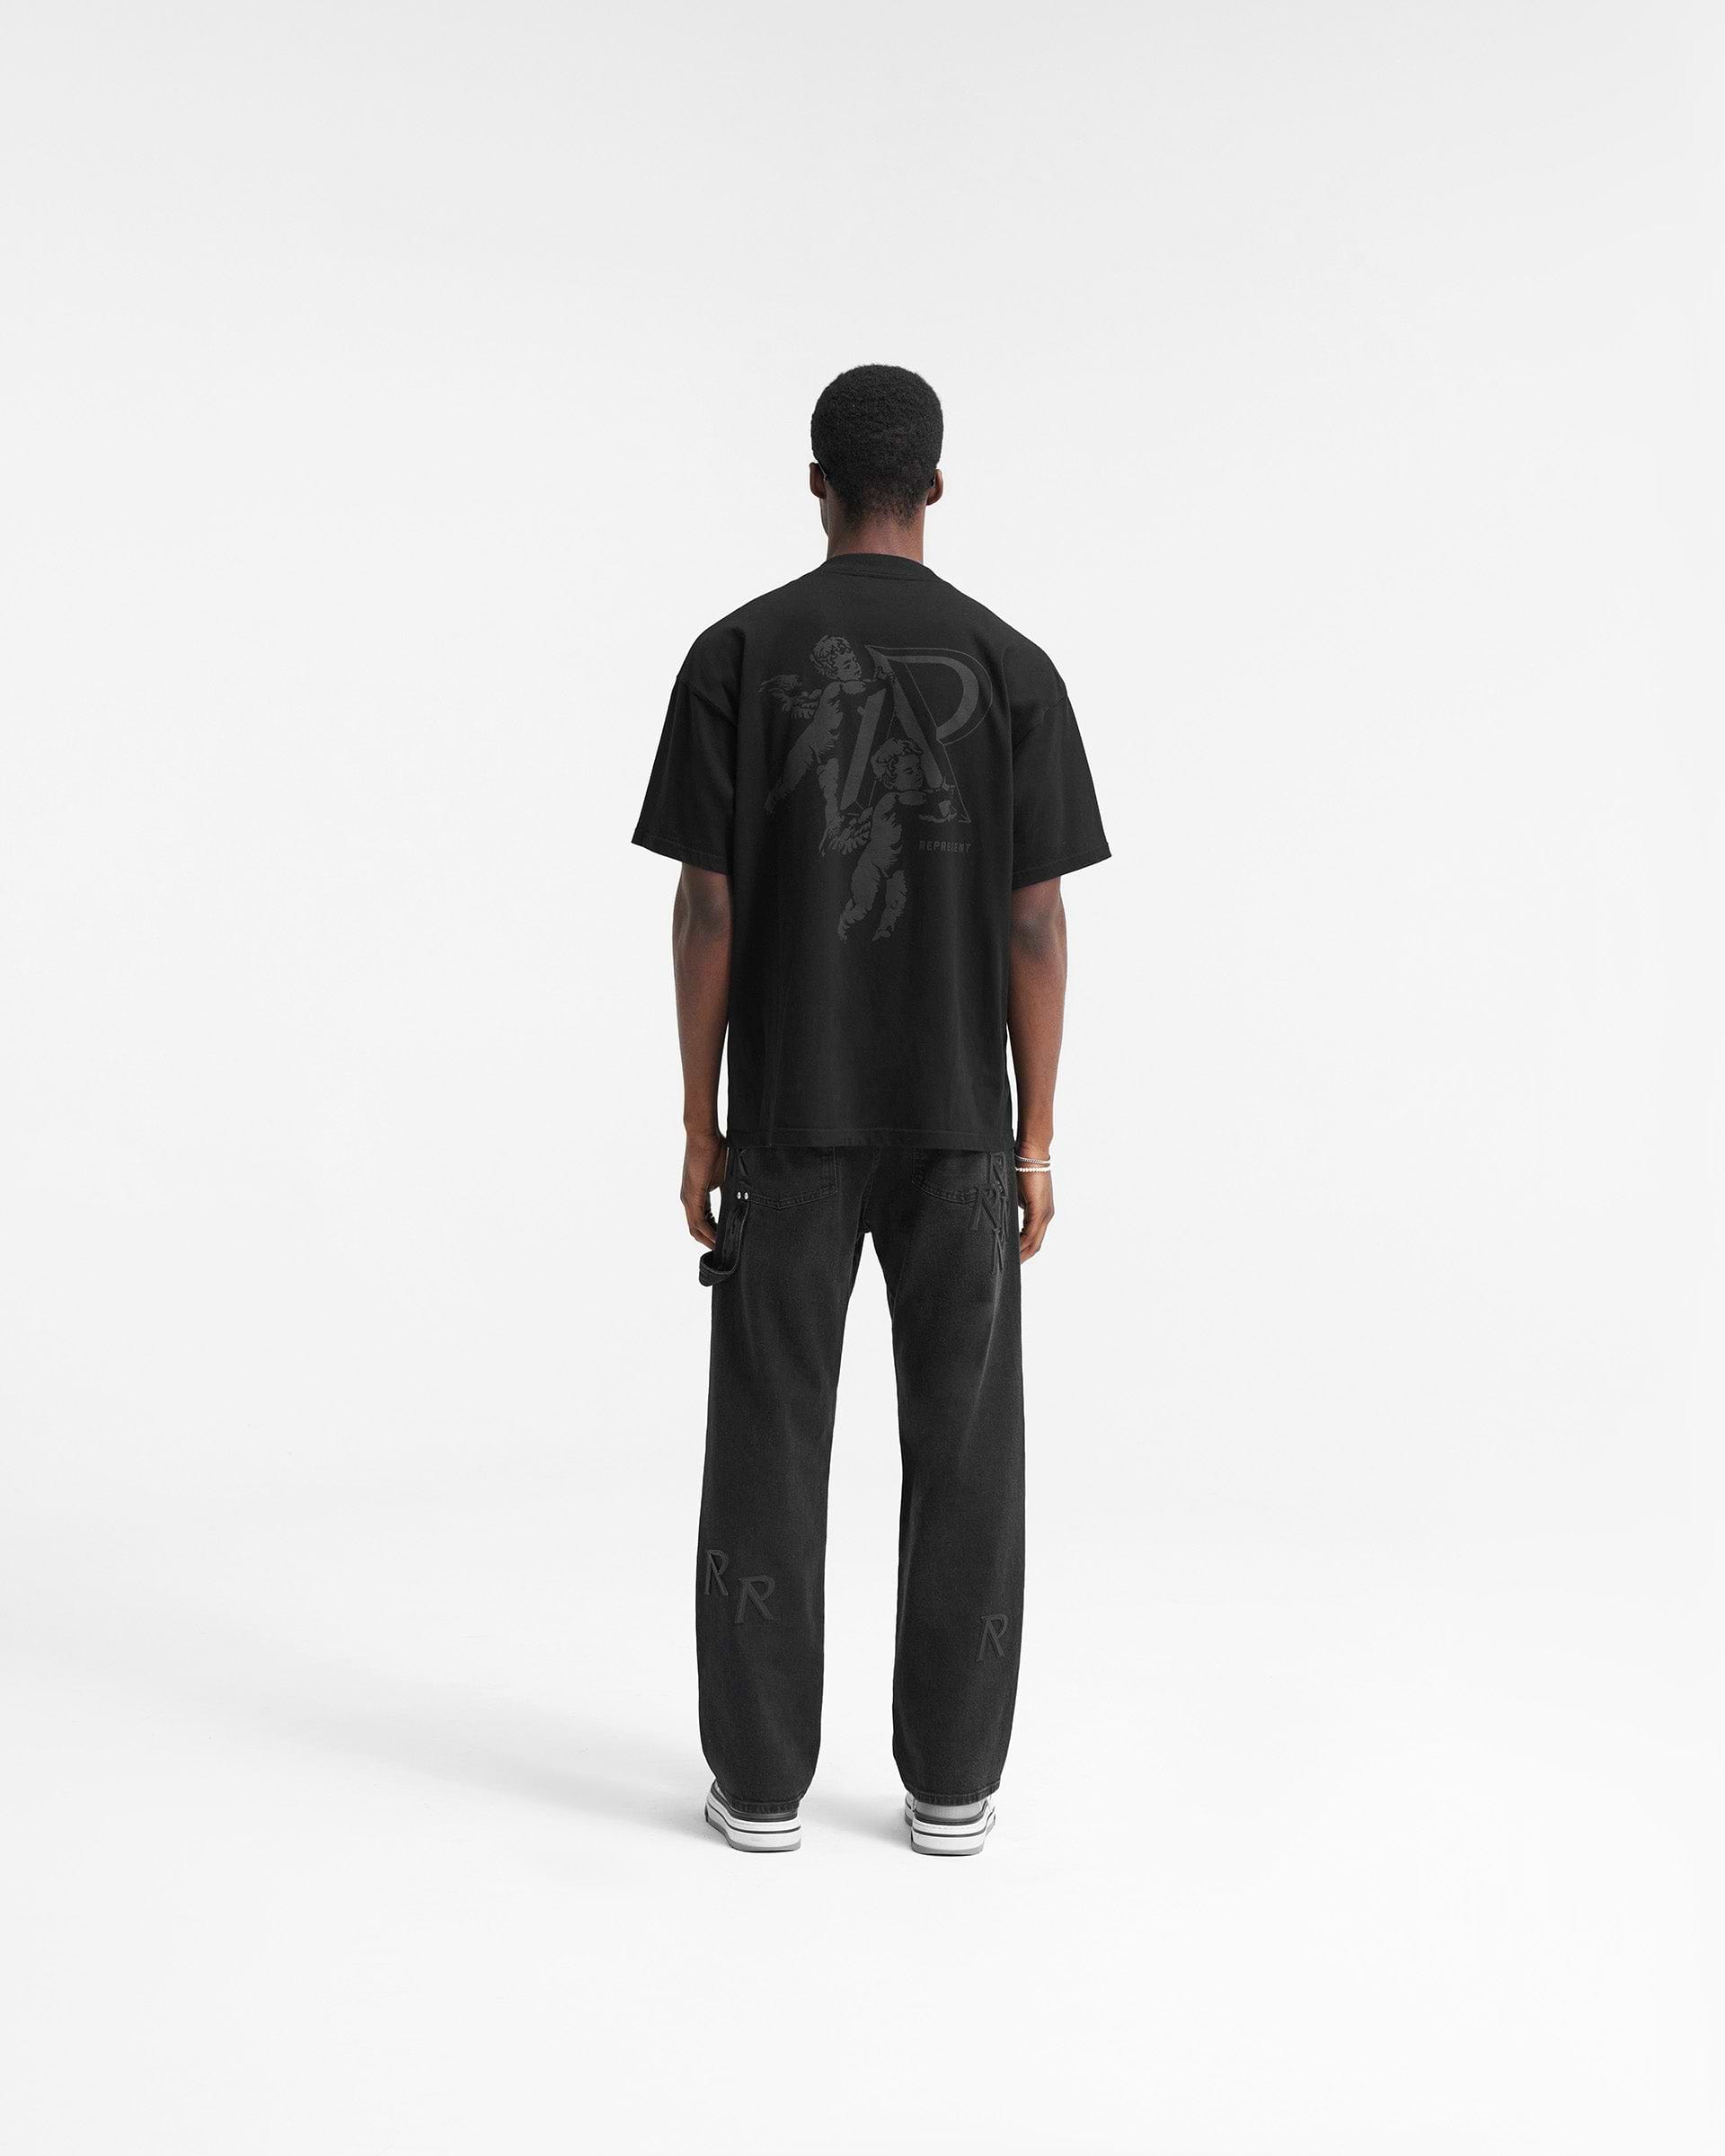 Cherub Initial T-Shirt - Black